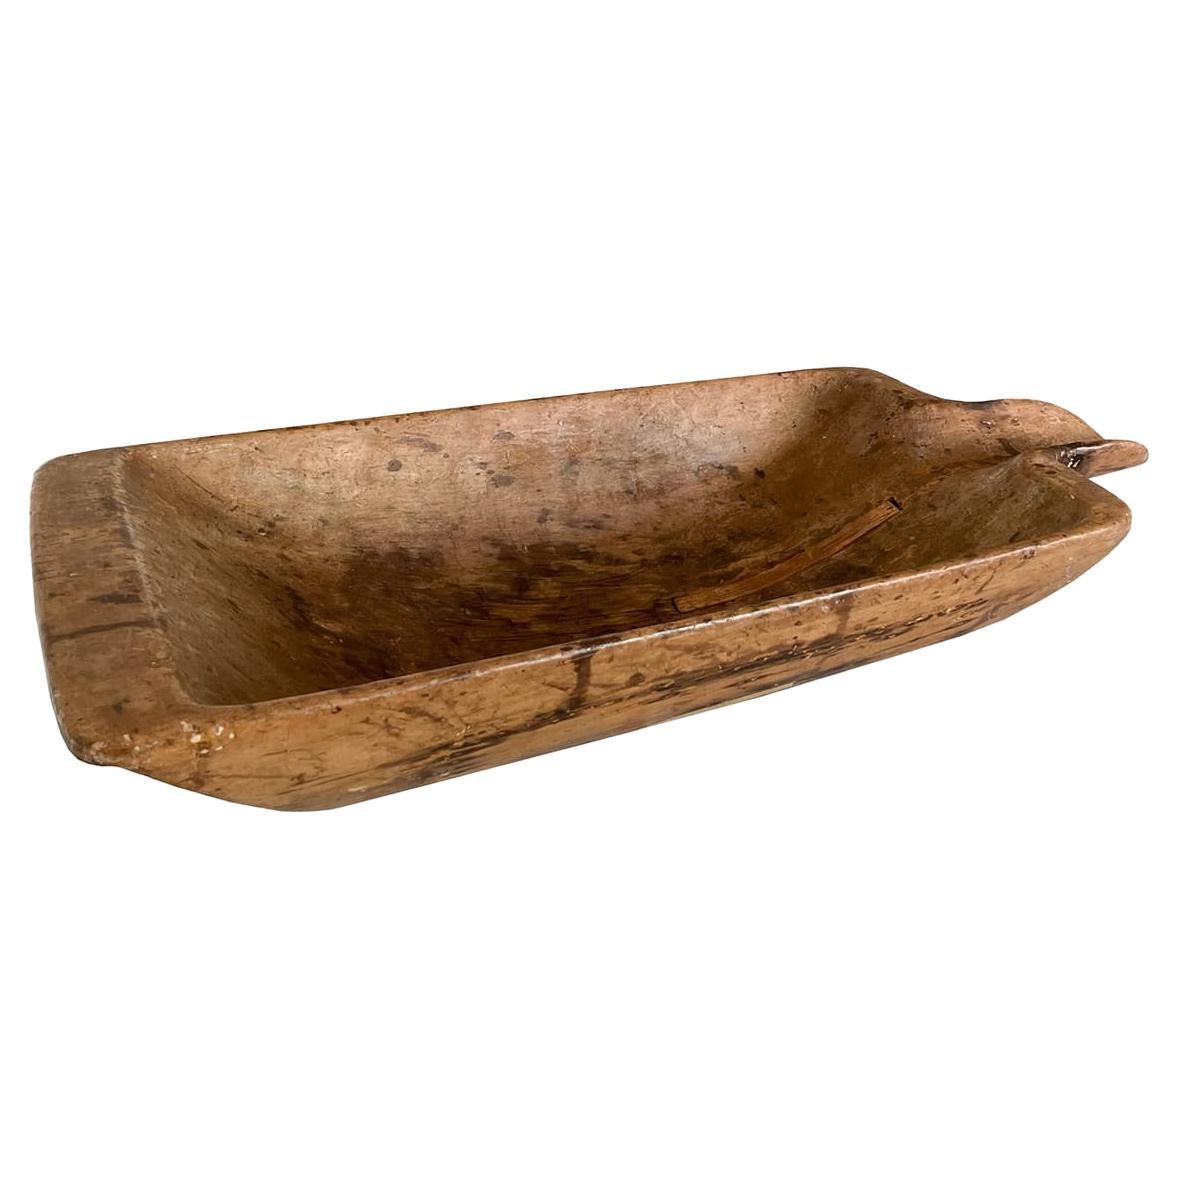 Large Swedish Wabi Sabi Wooden Bowl, Late 1800s